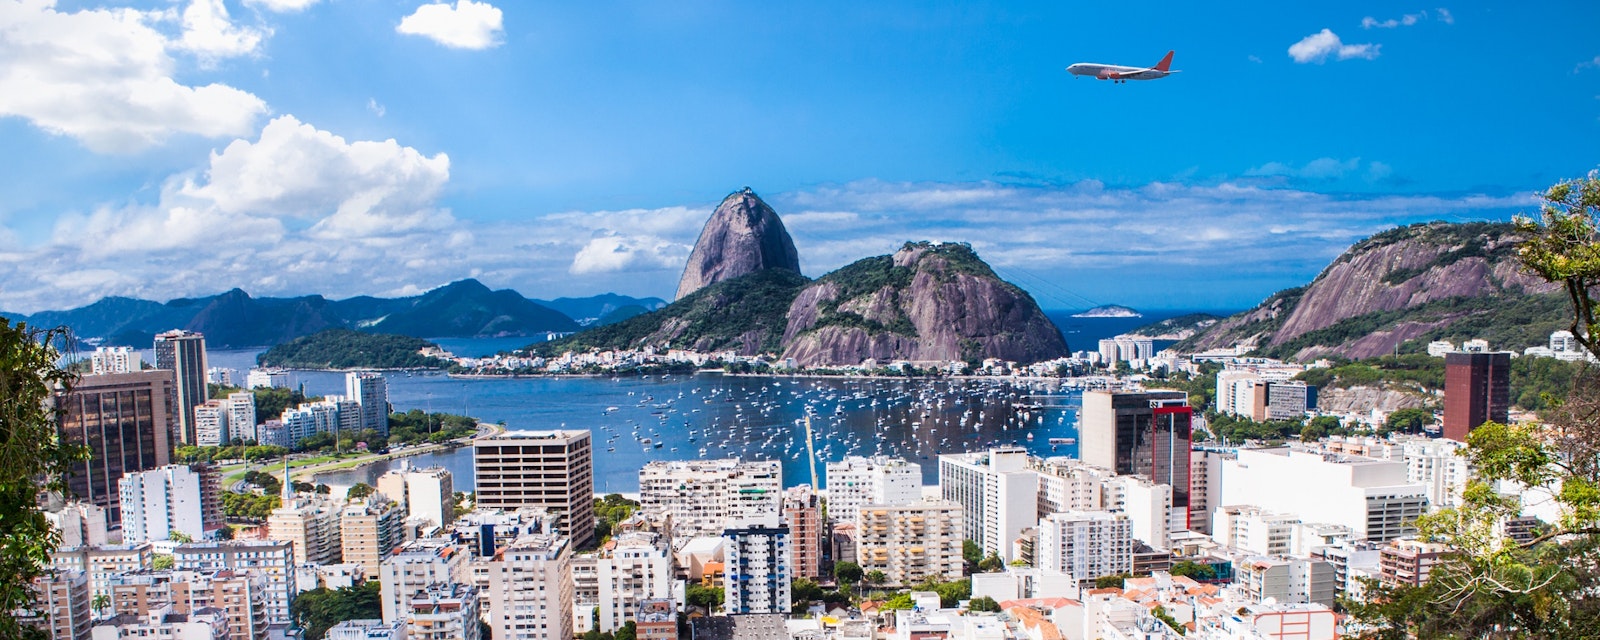 Panoramic,View,Of,Rio,De,Janeiro,And,Sugar,Loaf,,Brazil